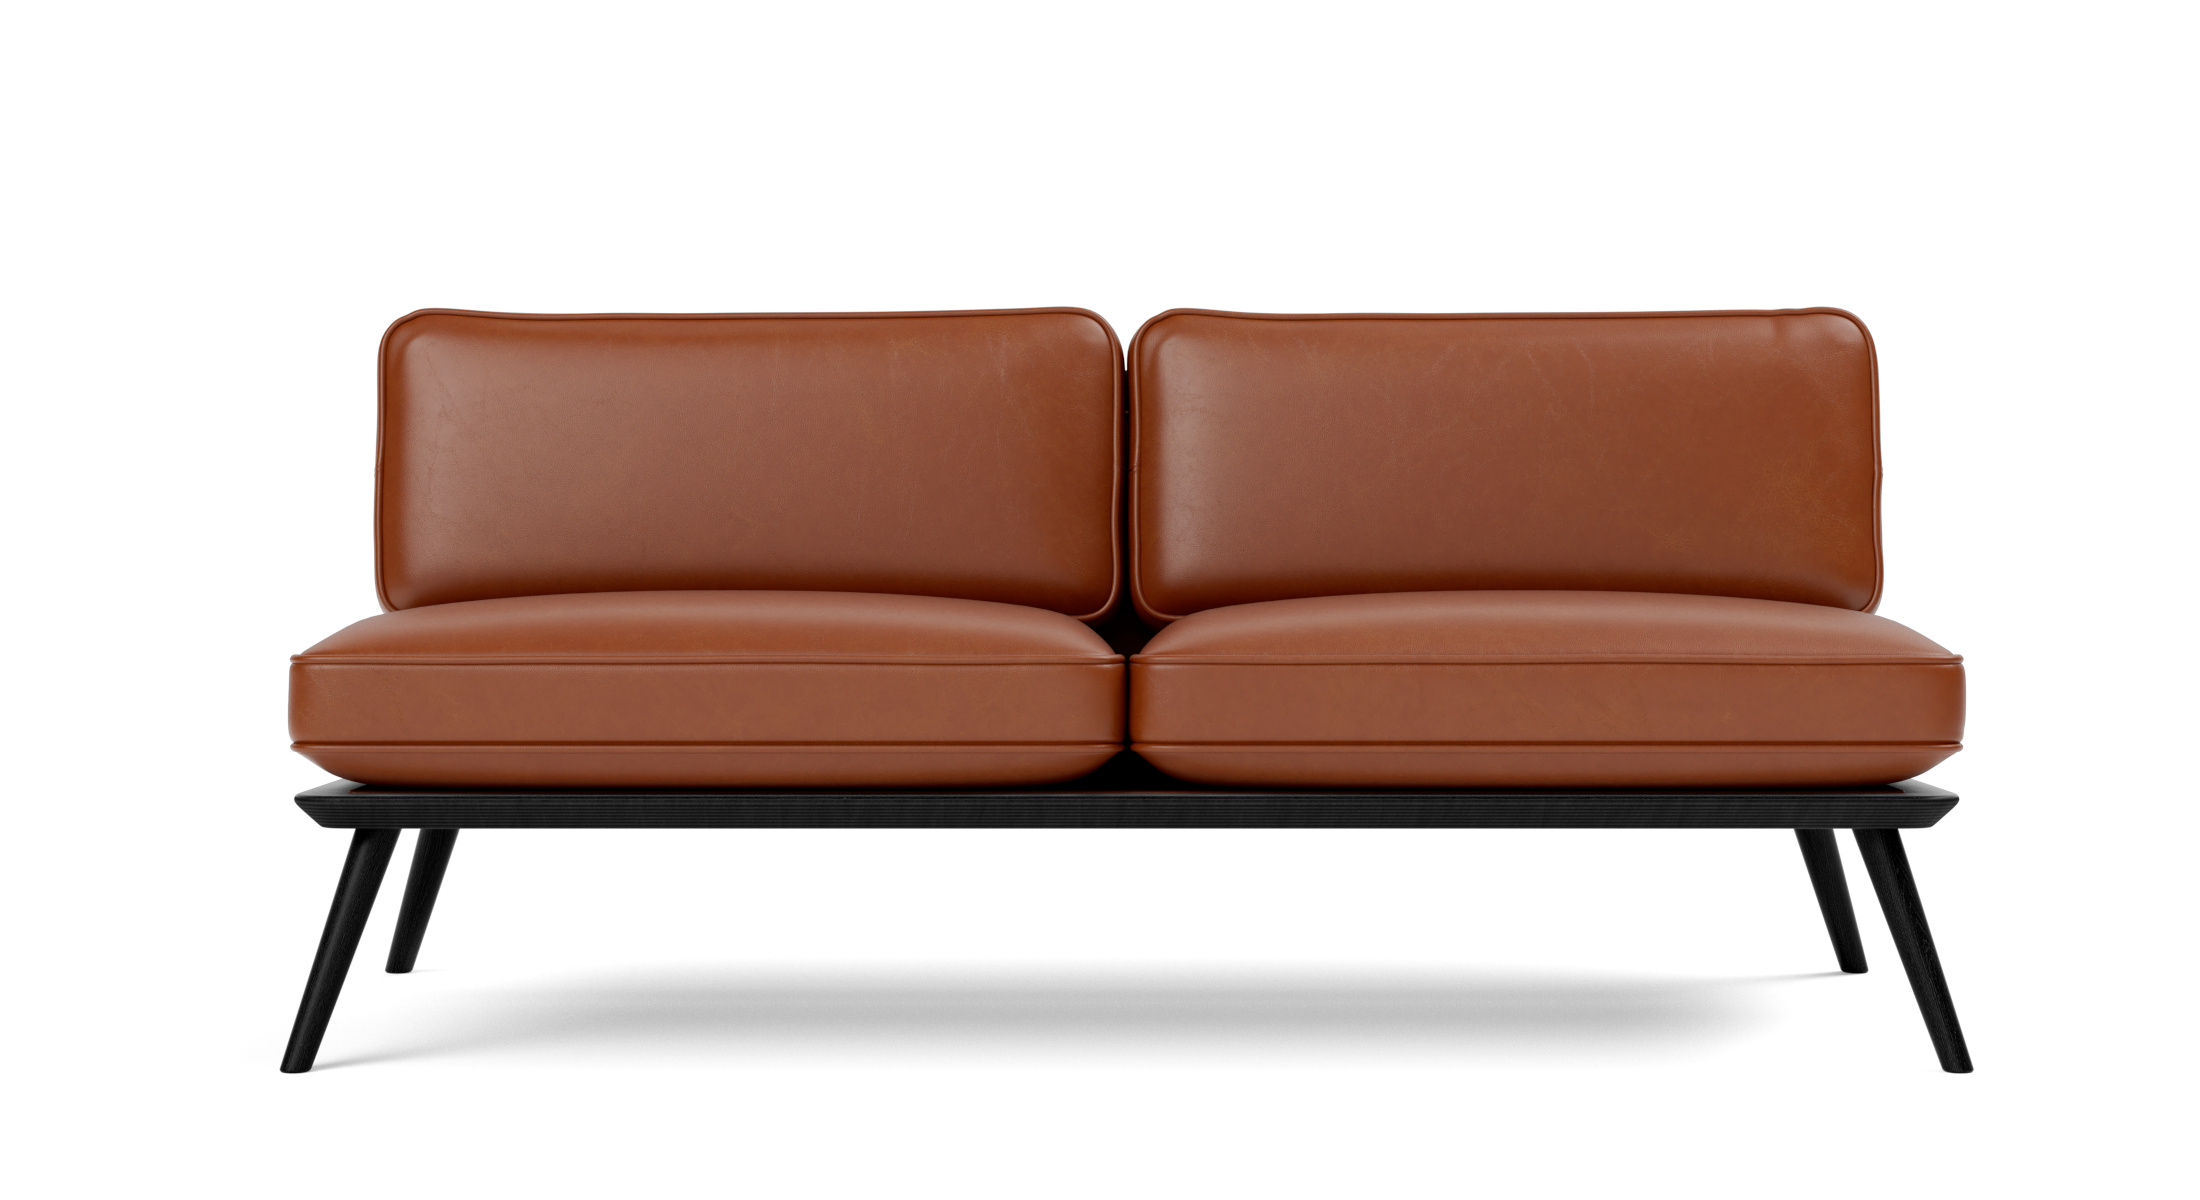 Spine Lounge Suite Sofa, esche schwarz / leder cera 905 russet brown